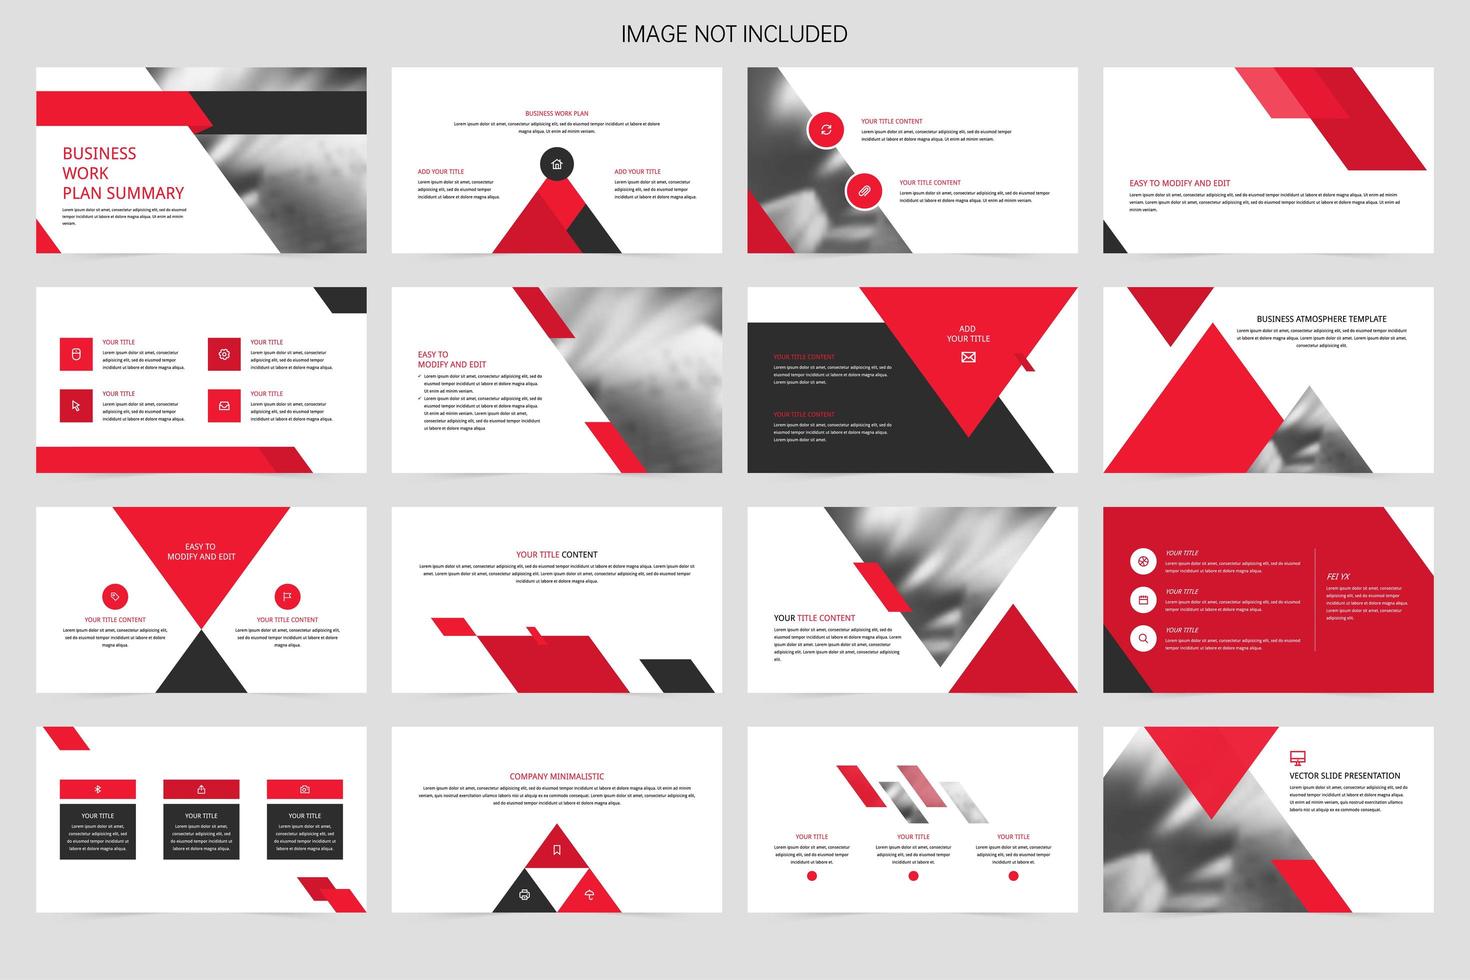 Company minimalistic slide presentation vector